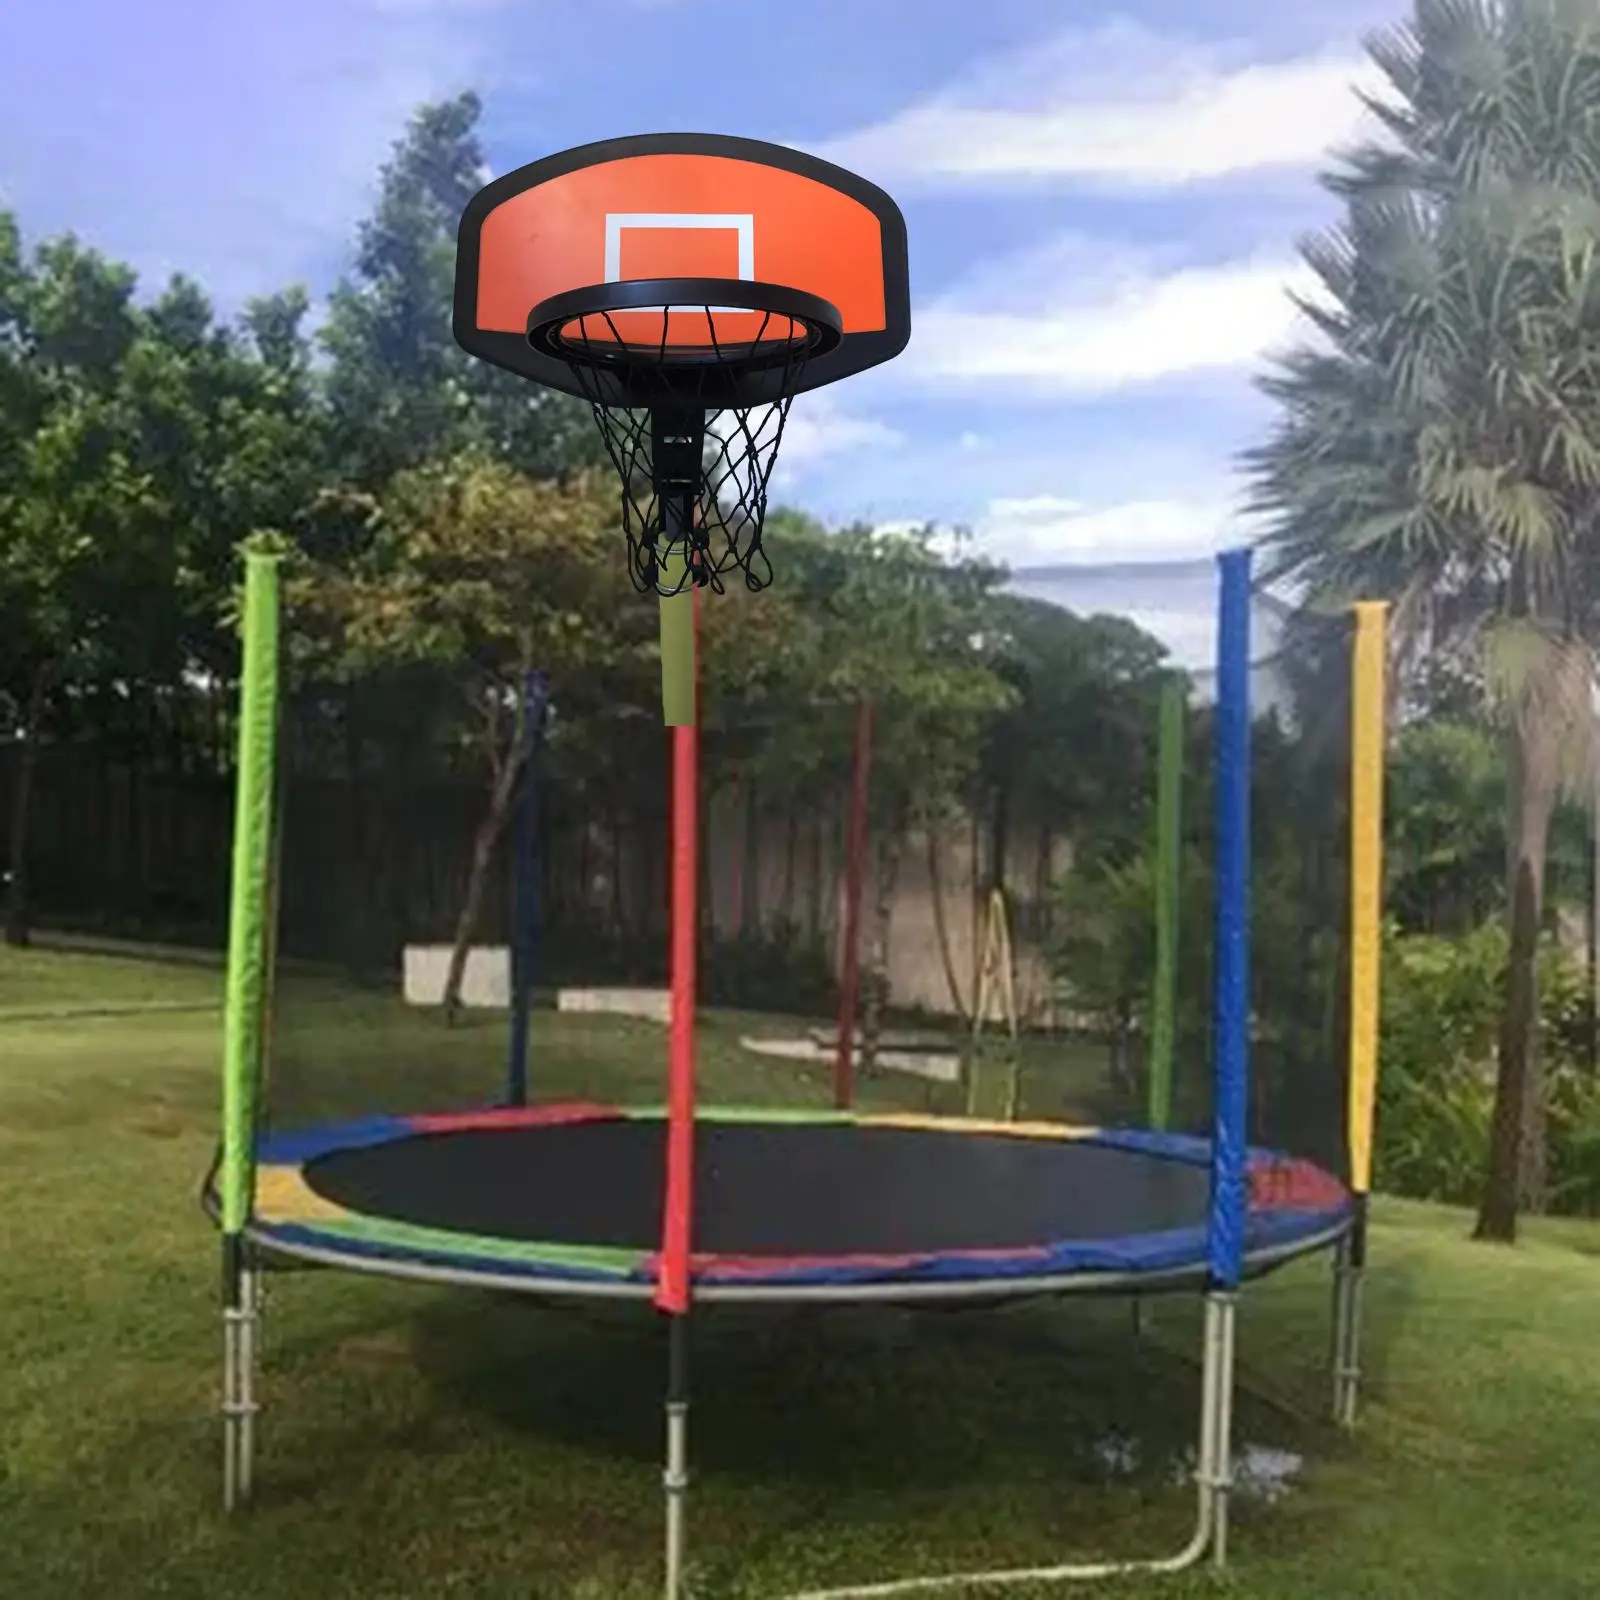 

Trampoline Basketball Hoop Replacement Trim Toy Basketball Training Basketball Goal for Garden Backyard Indoor Outside Children